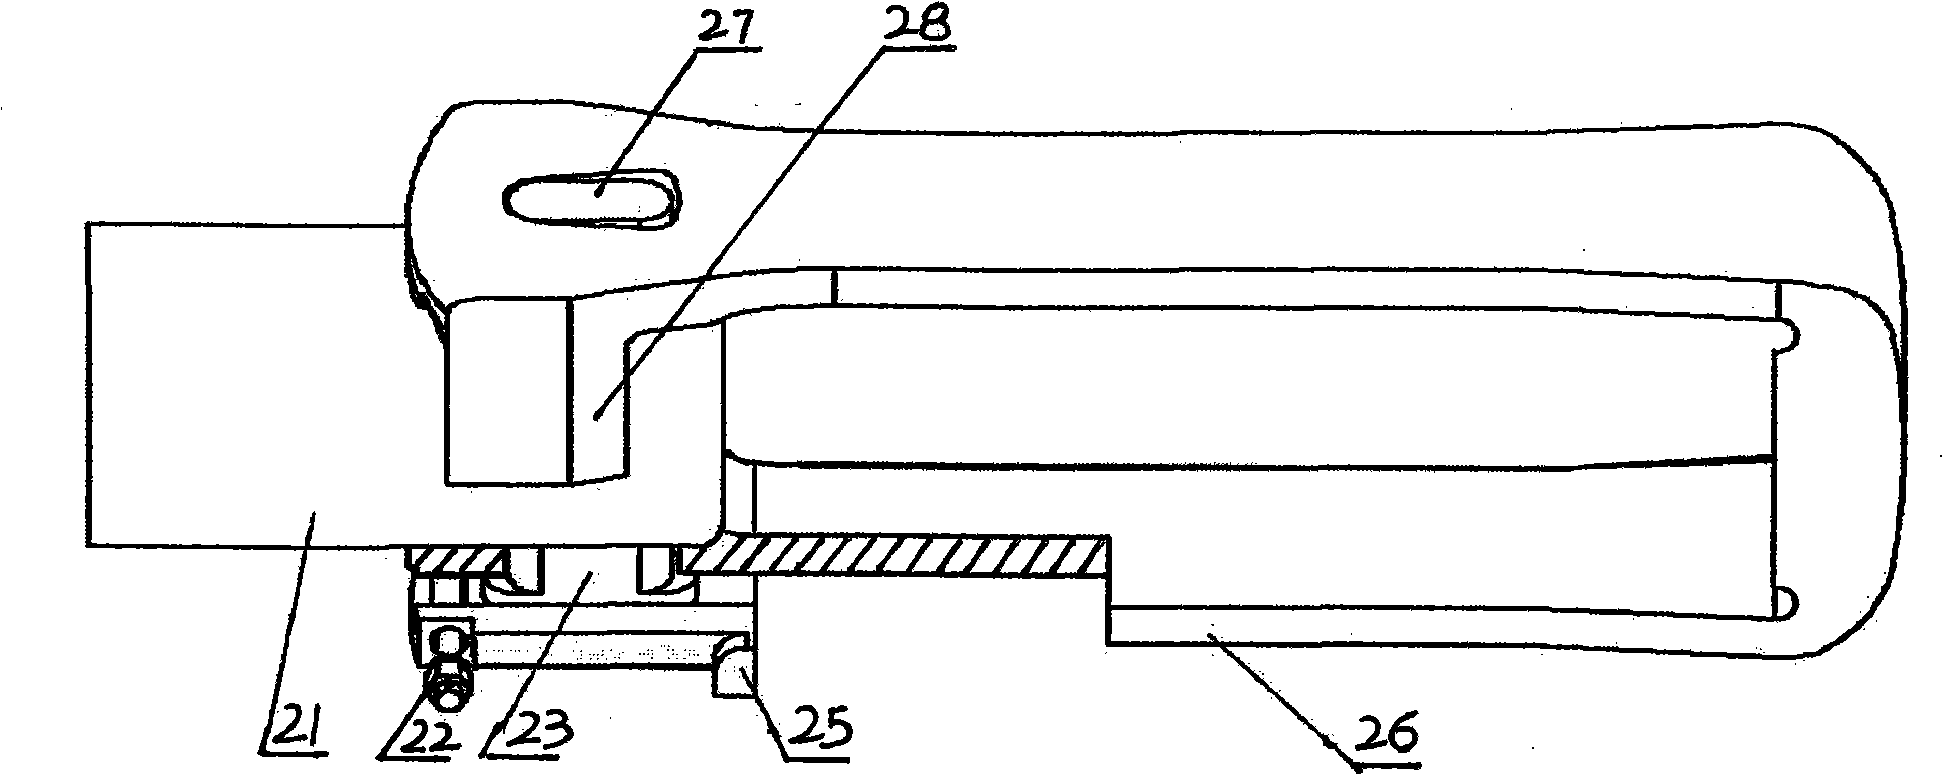 Drop panel jack-in wrought steel hook tail frame